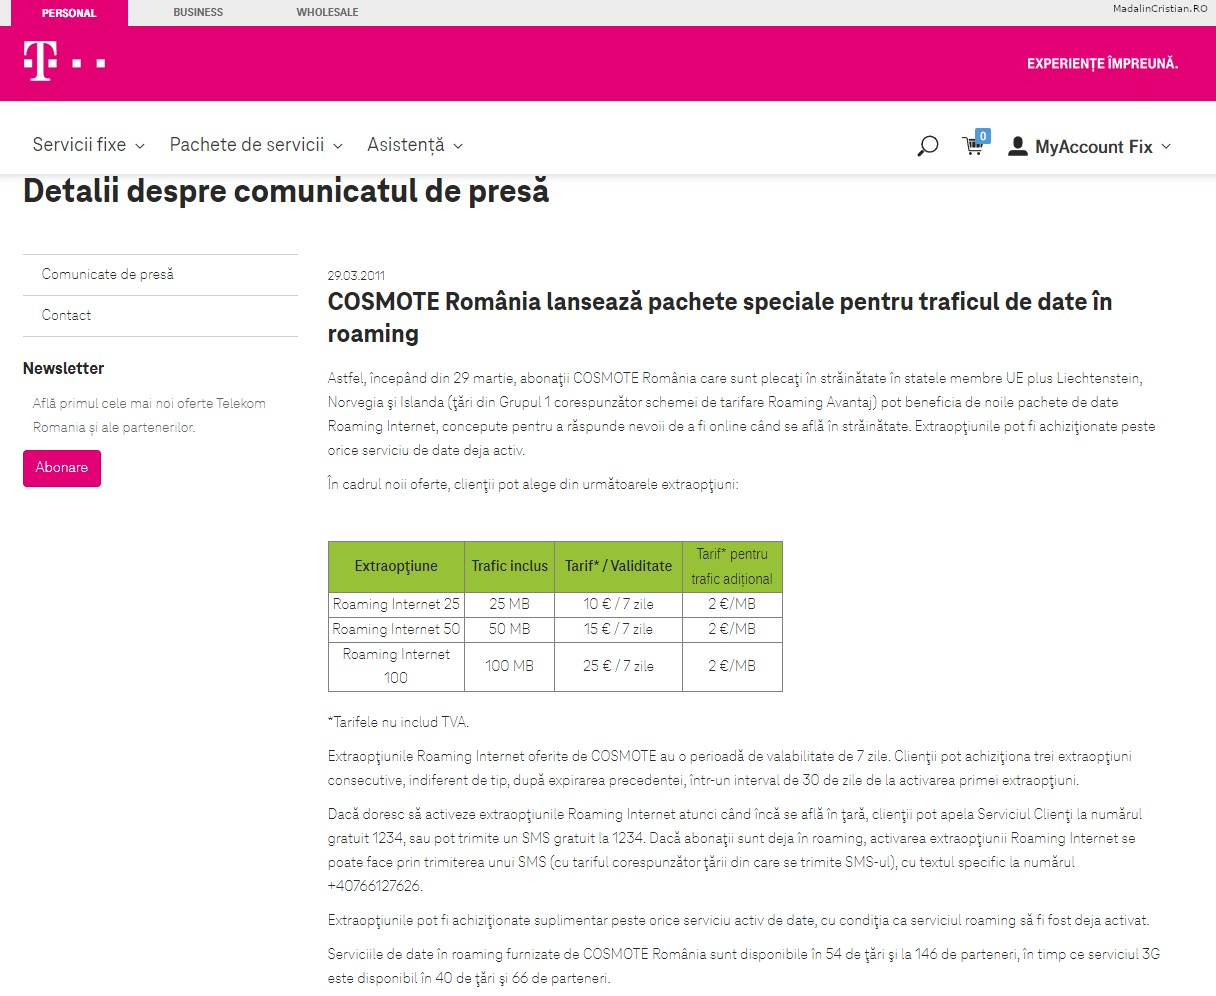 Comunicat de presa Telekom 29.03.2011 COSMOTE Romania lanseaza pachete speciale pentru traficul de date in roaming